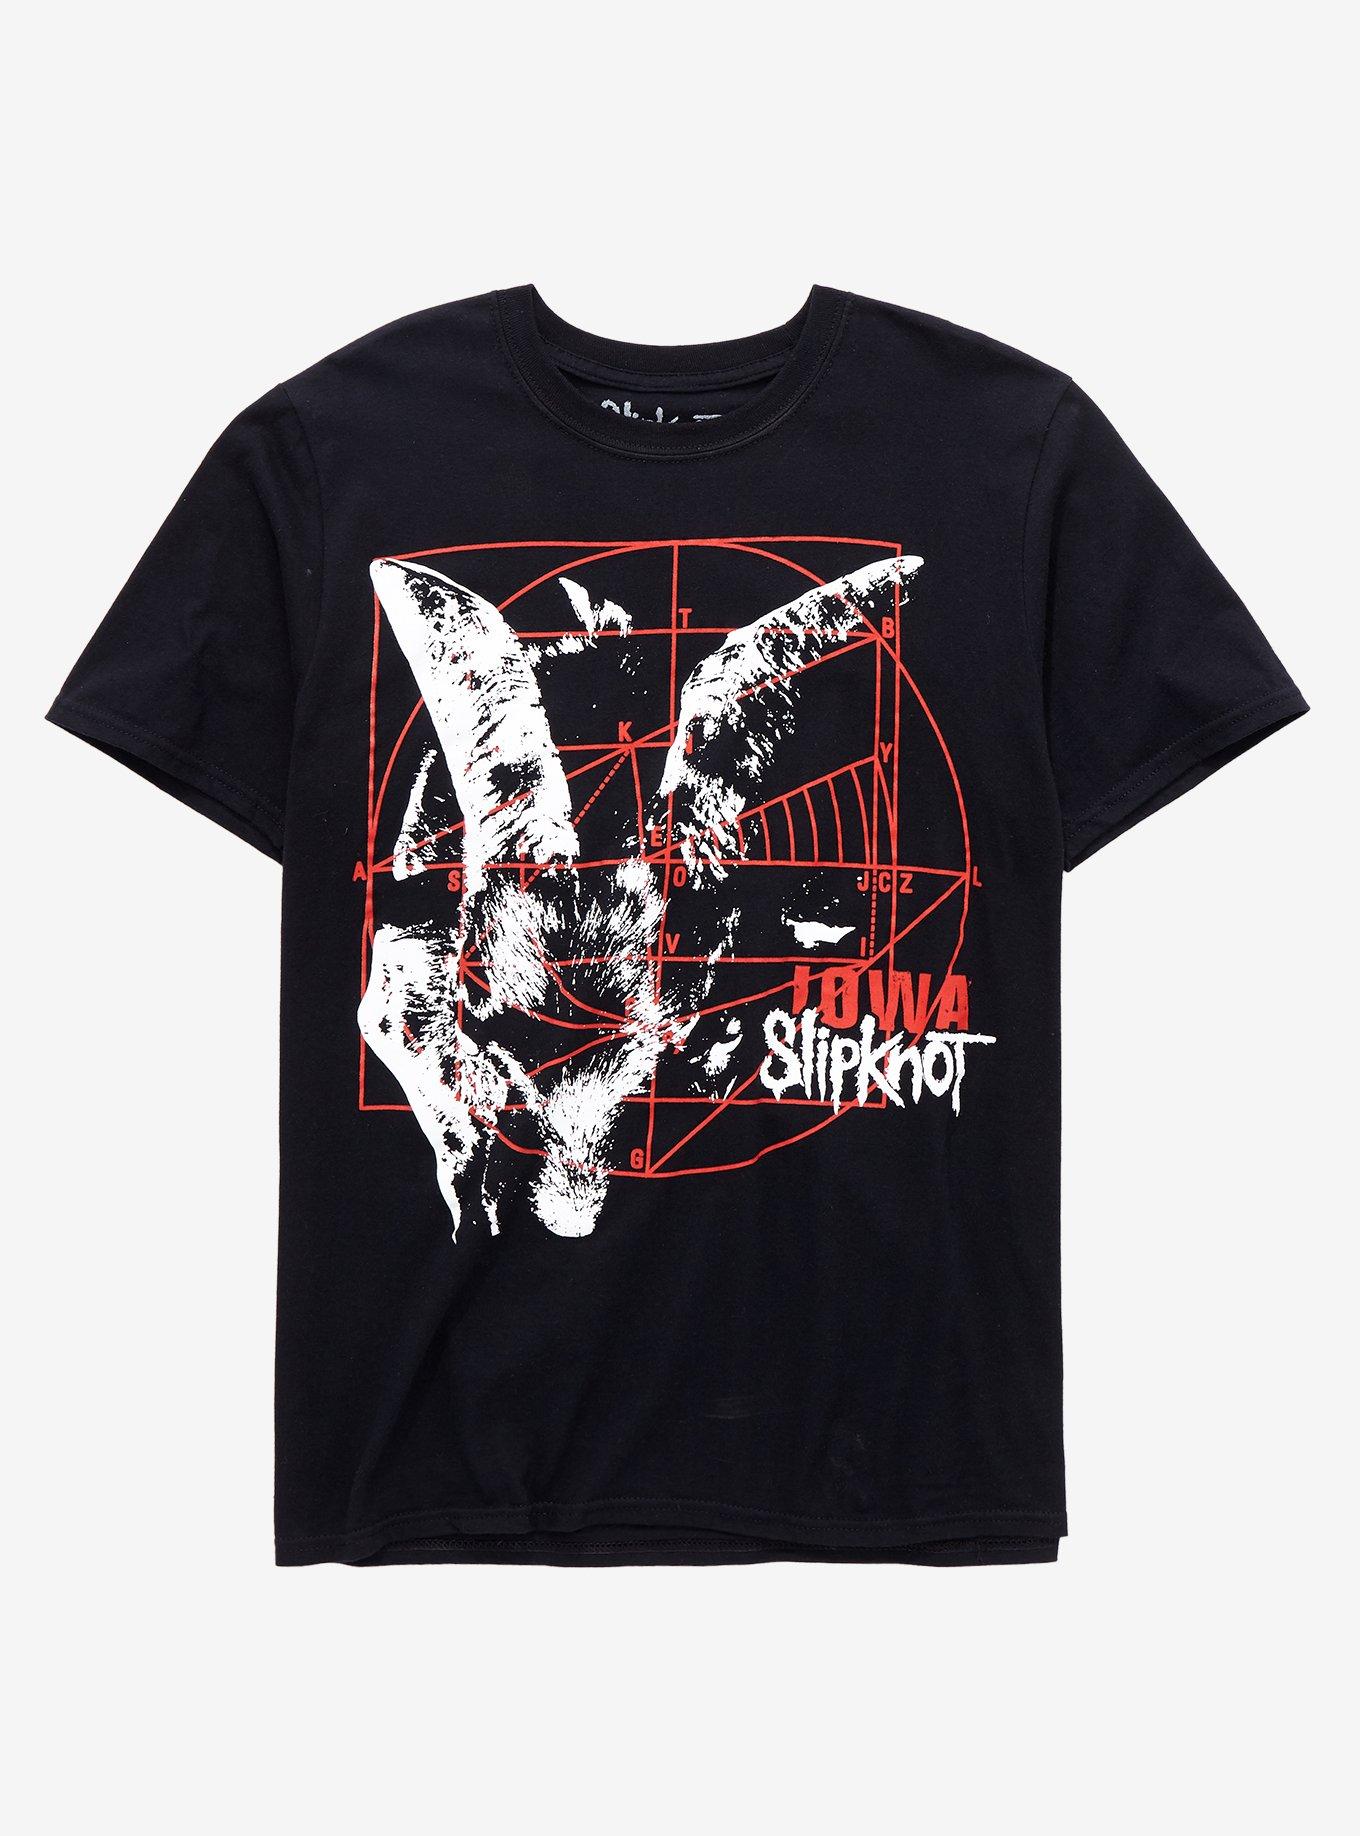 Slipknot T Shirt Design | escapeauthority.com